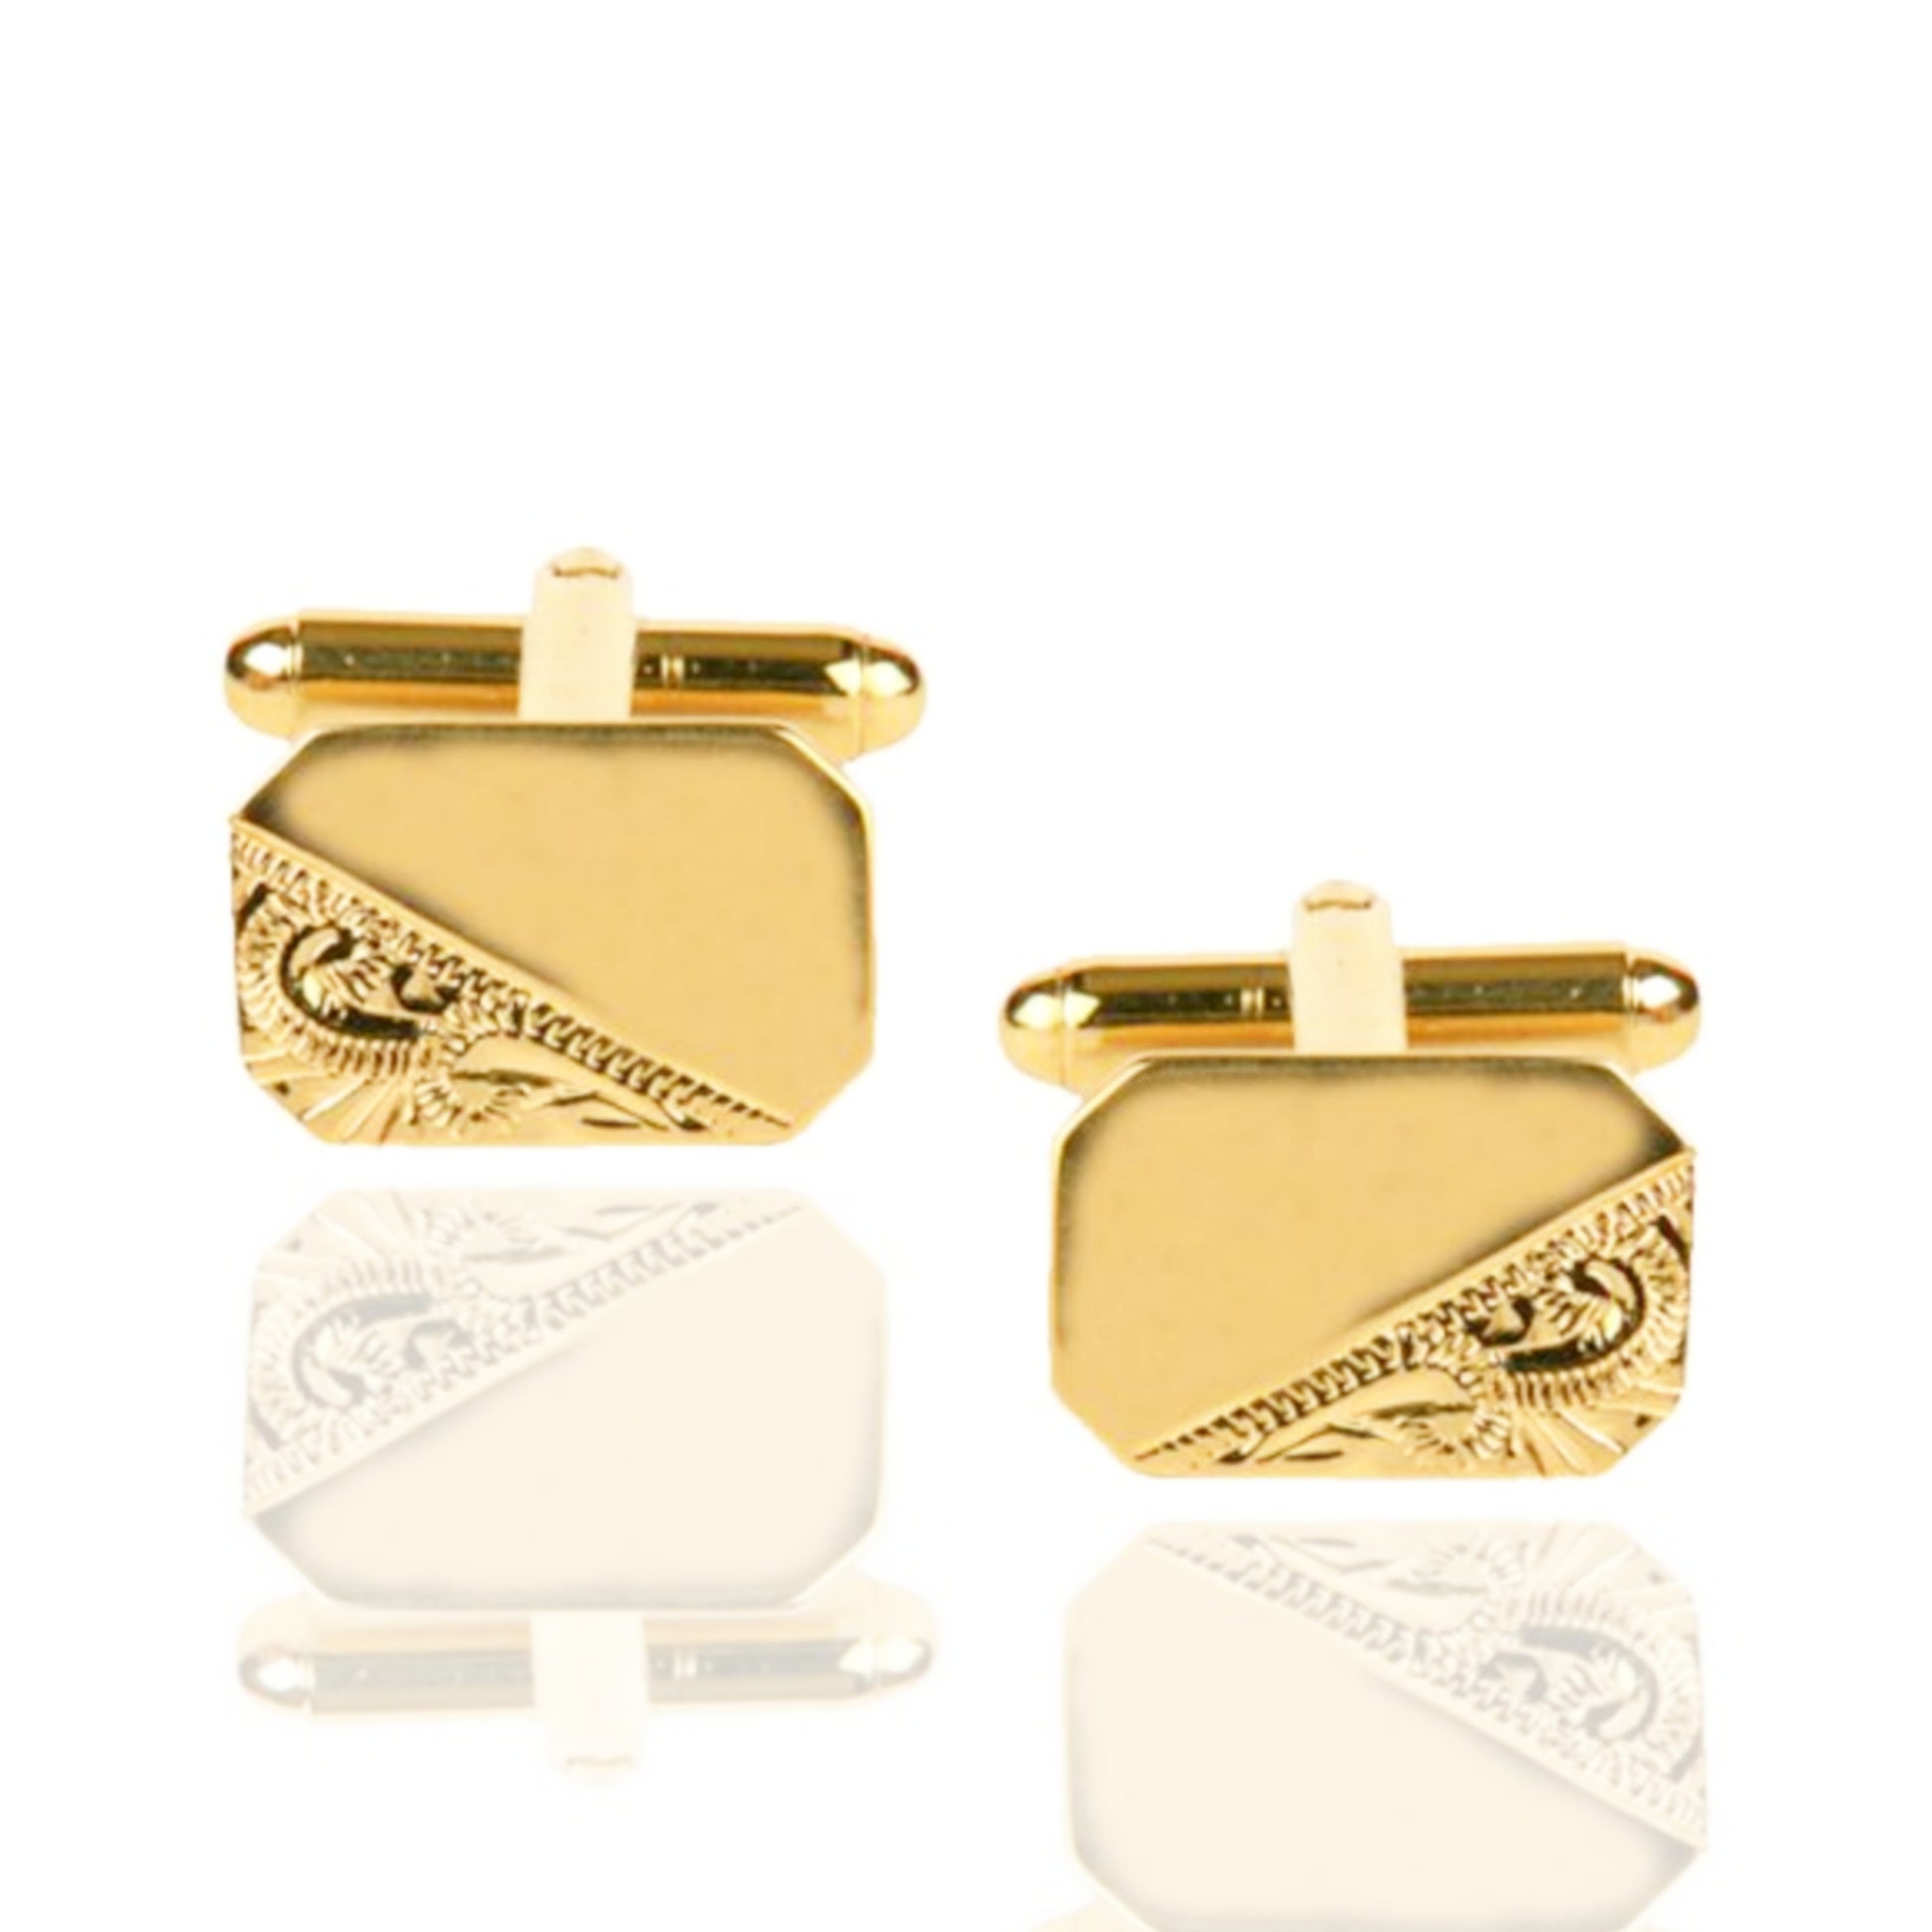 Rectangular 1/3 Engraved Design Cut Corners Gold Plated Cufflinks - HK Jewels